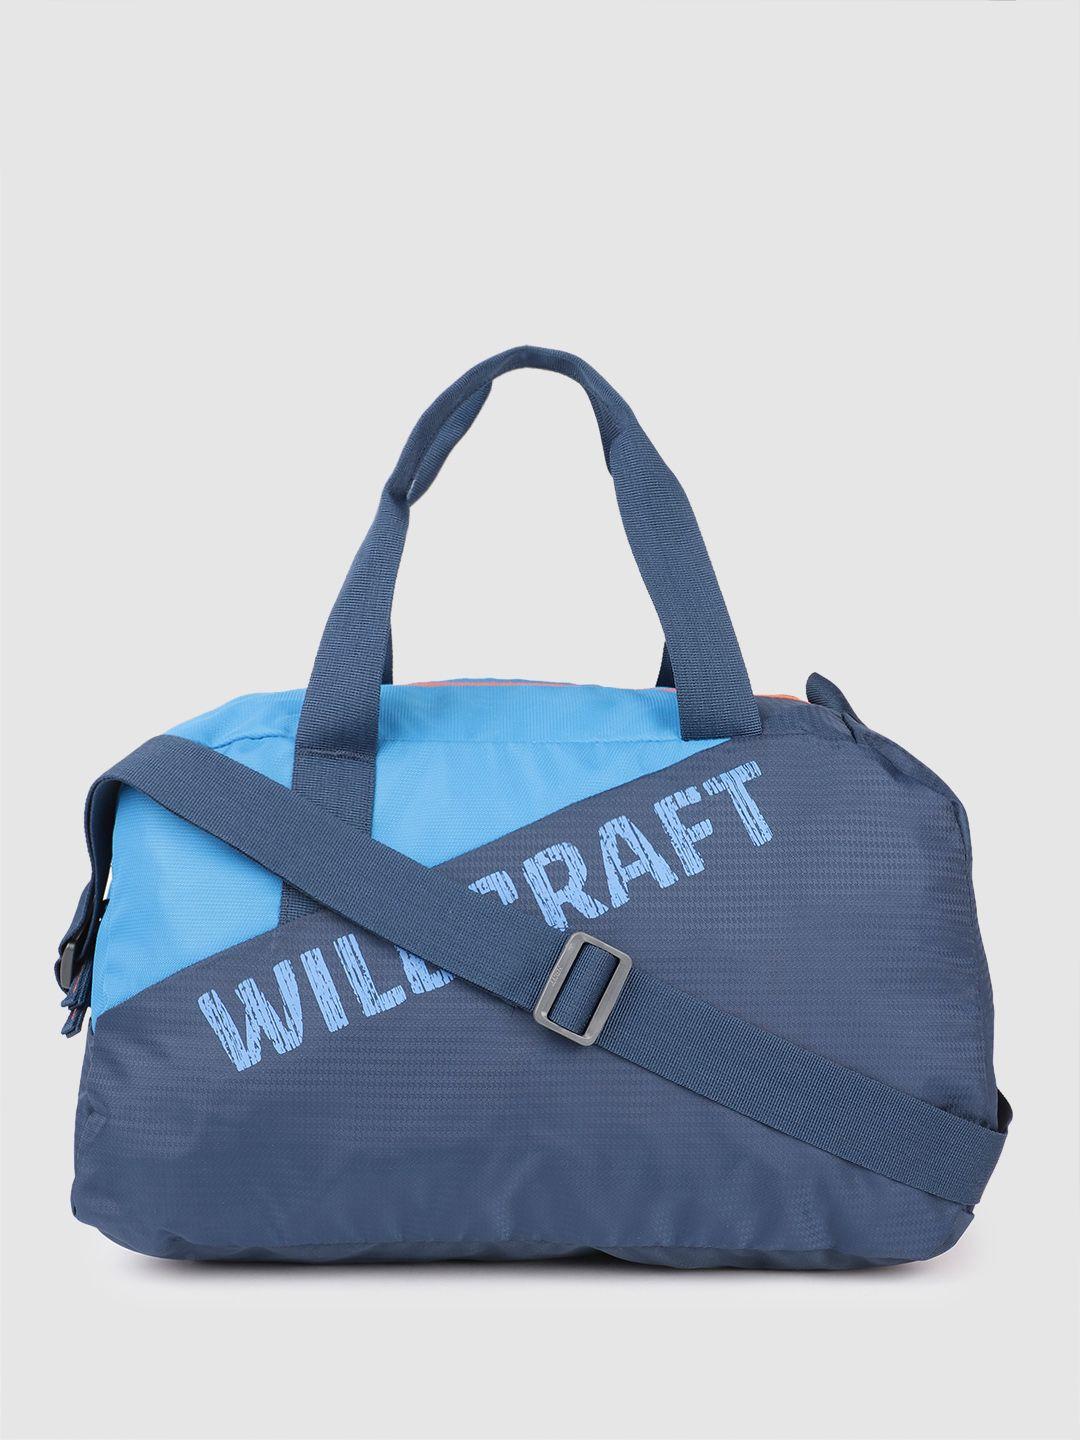 wildcraft unisex brand logo print colourblocked & houndstooth textured gym duffel bag